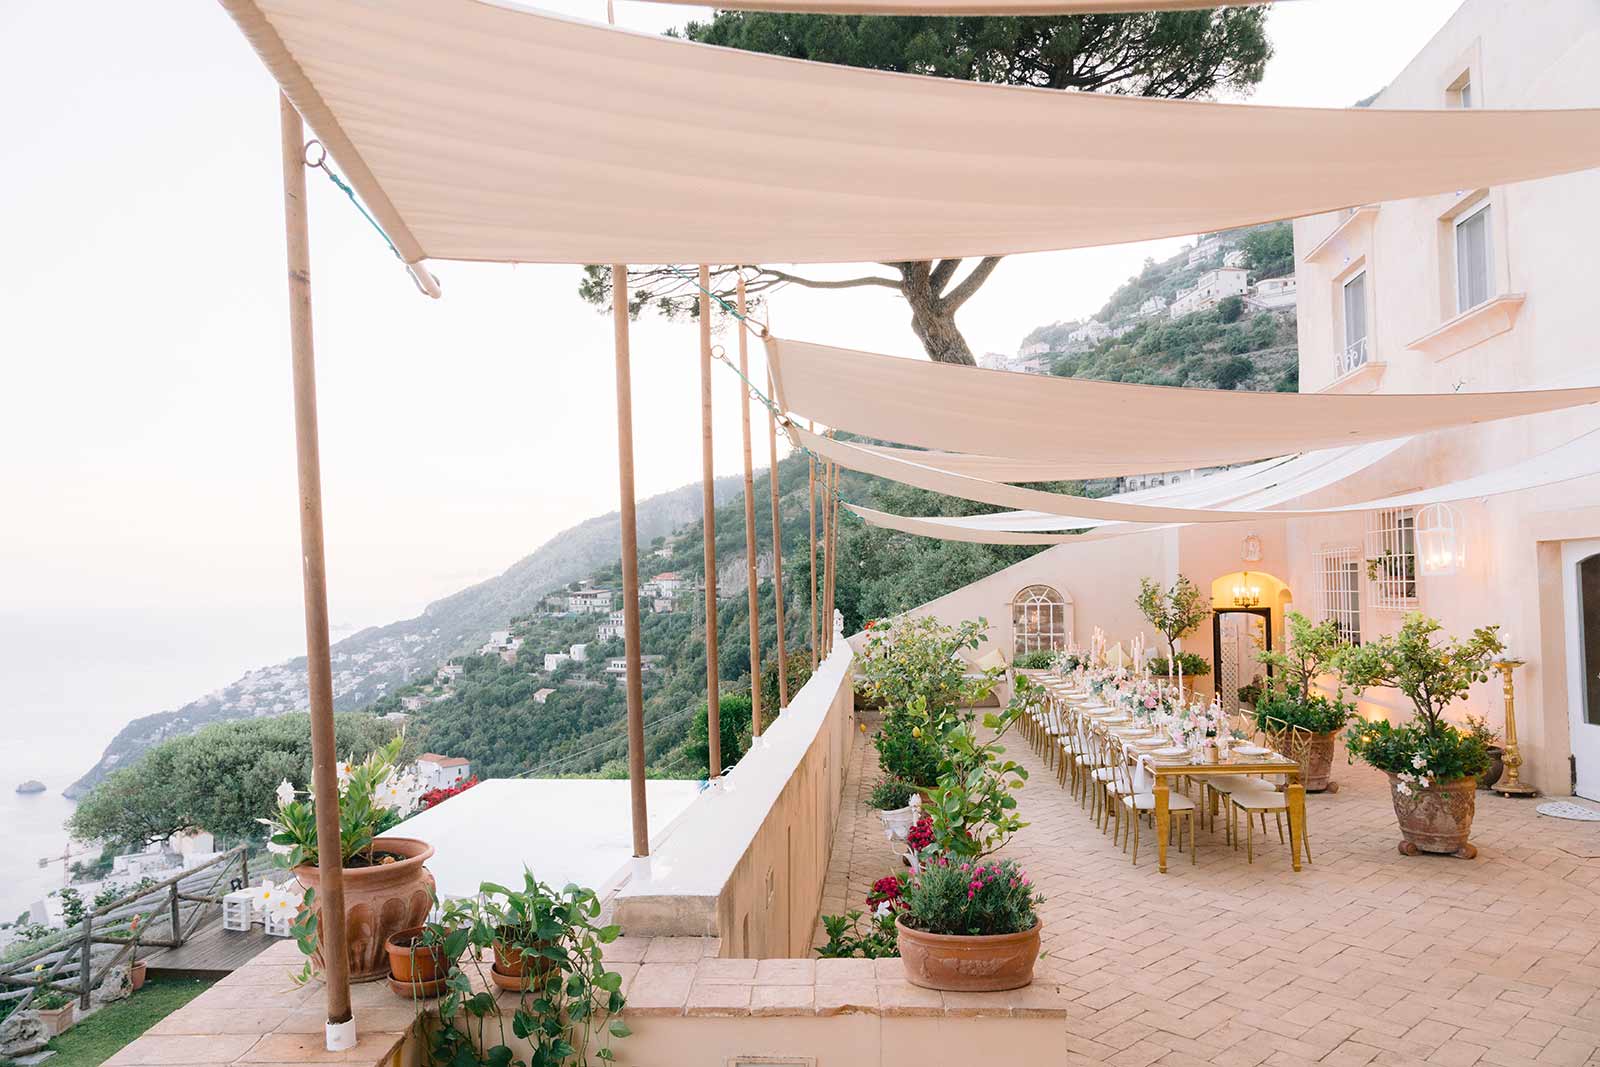 P&J Events, the best Italian wedding planners